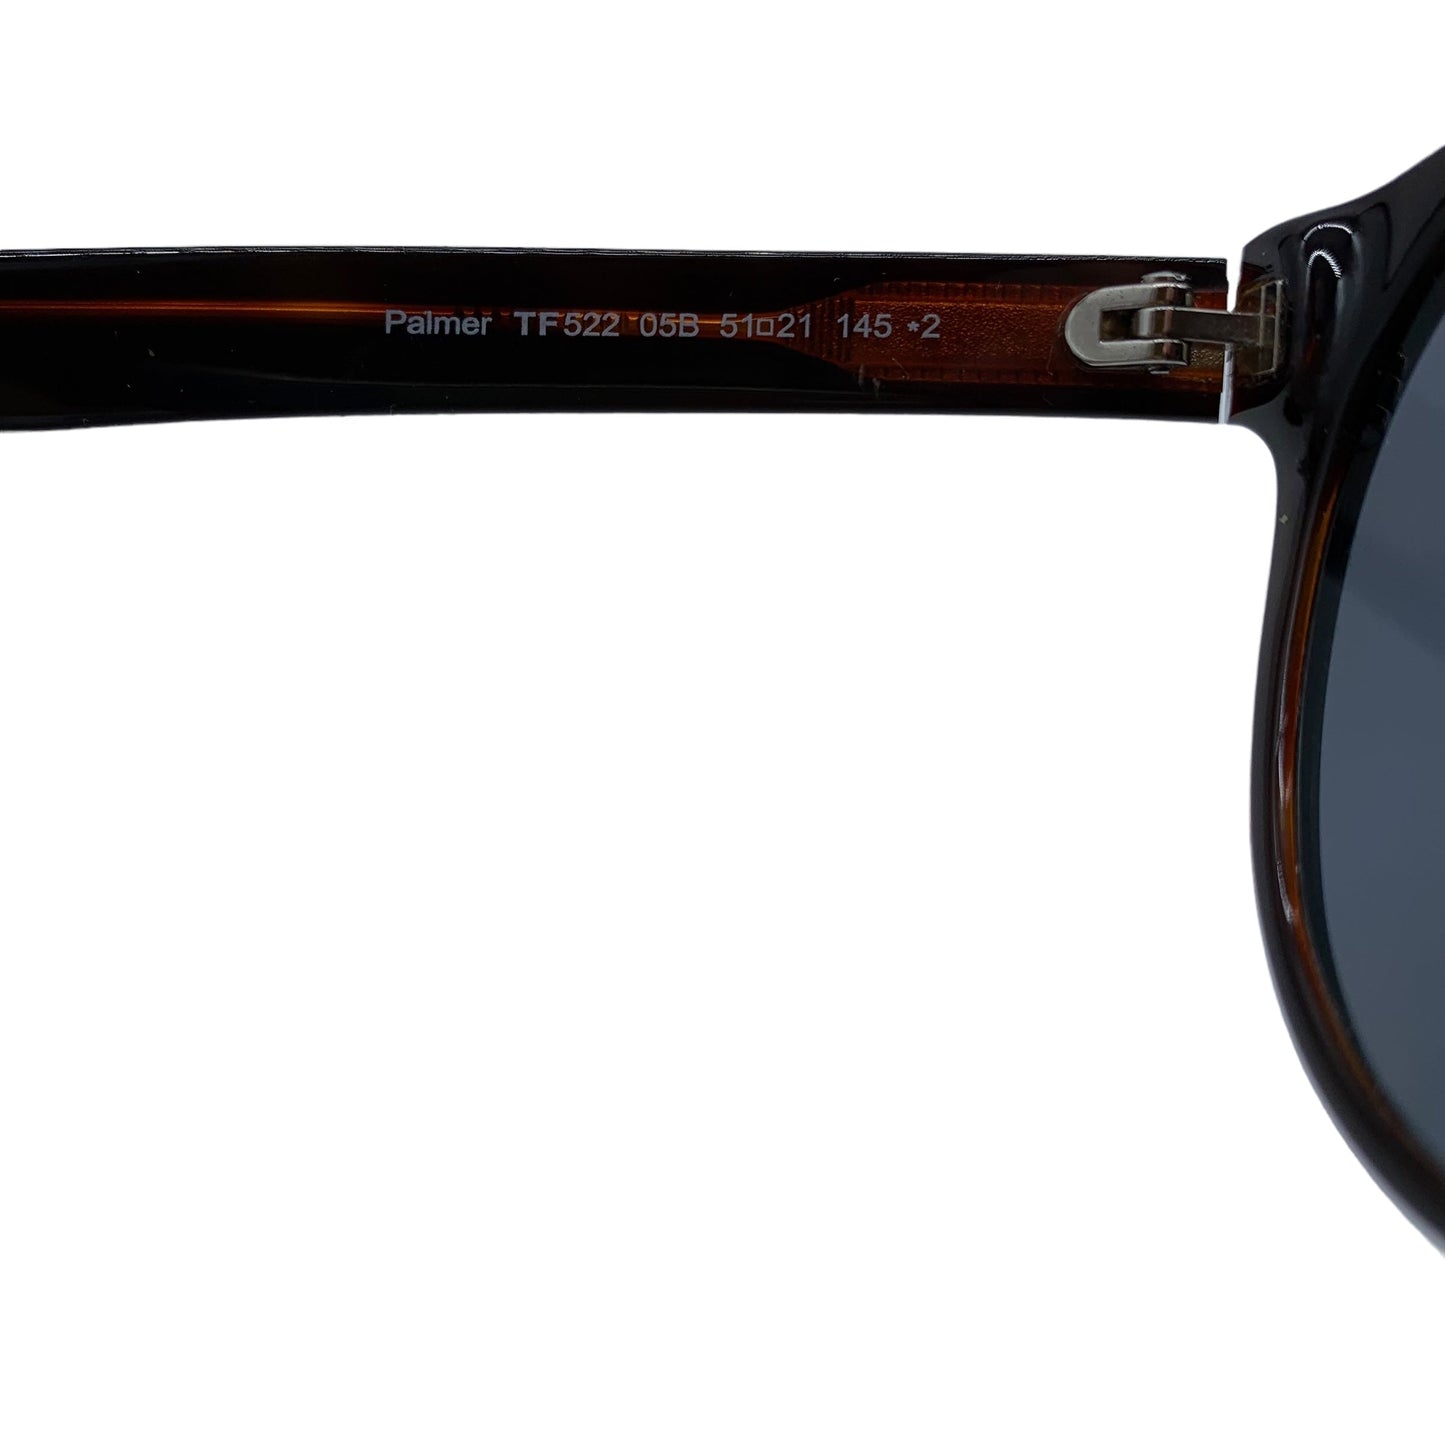 Sunglasses Designer Tom Ford